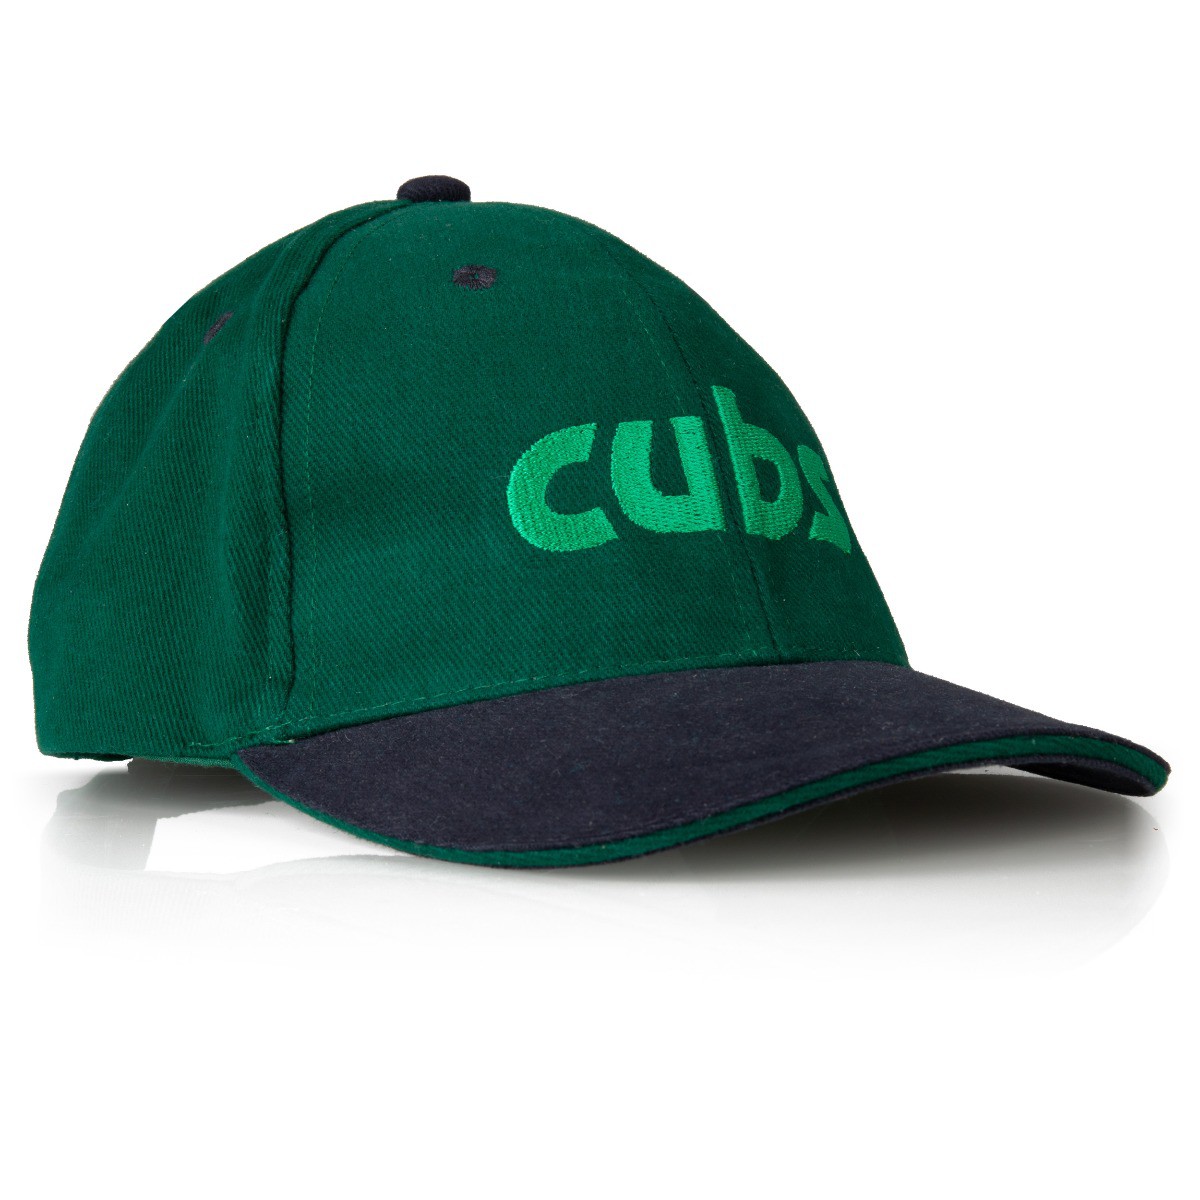 Cub Scouts Kids Baseball Cap-NULL-Green